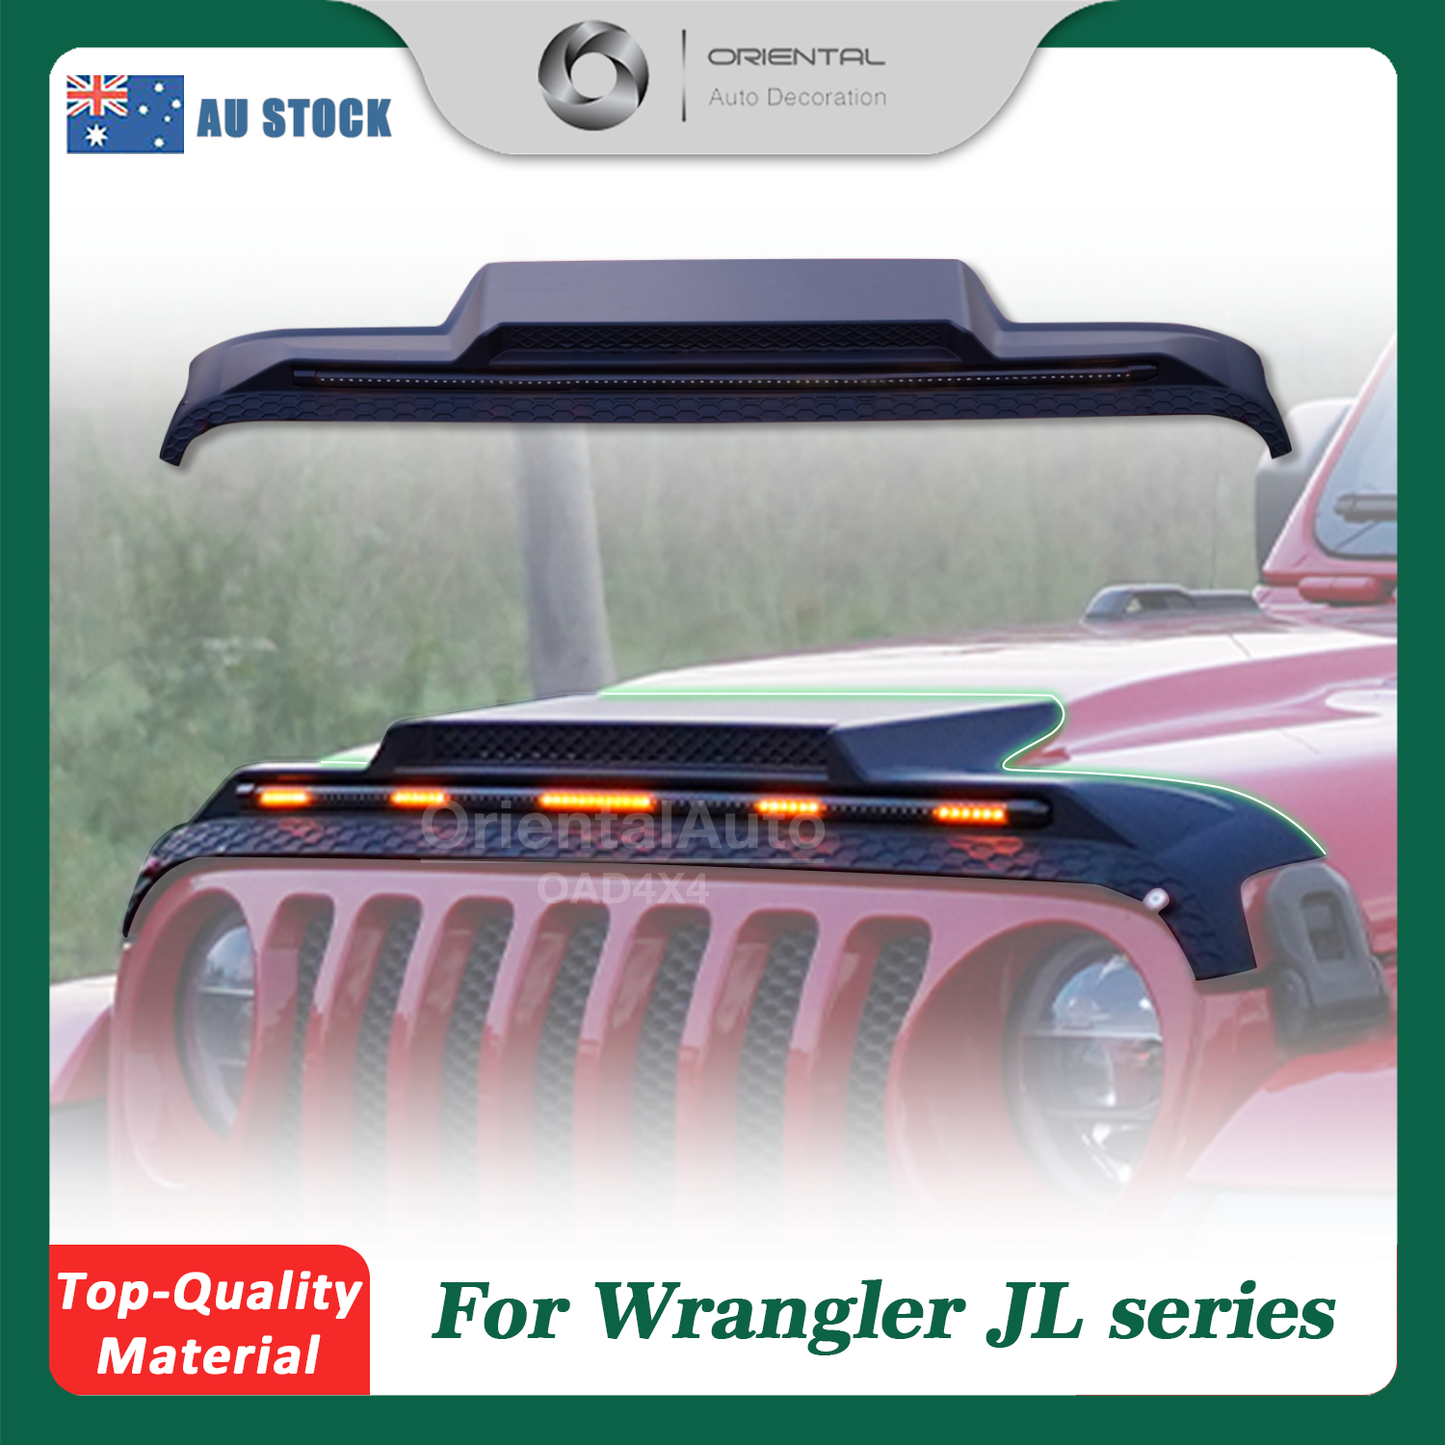 LED Light Bonnet Protector Hood Protector for Jeep Wrangler JL 4D 2018+